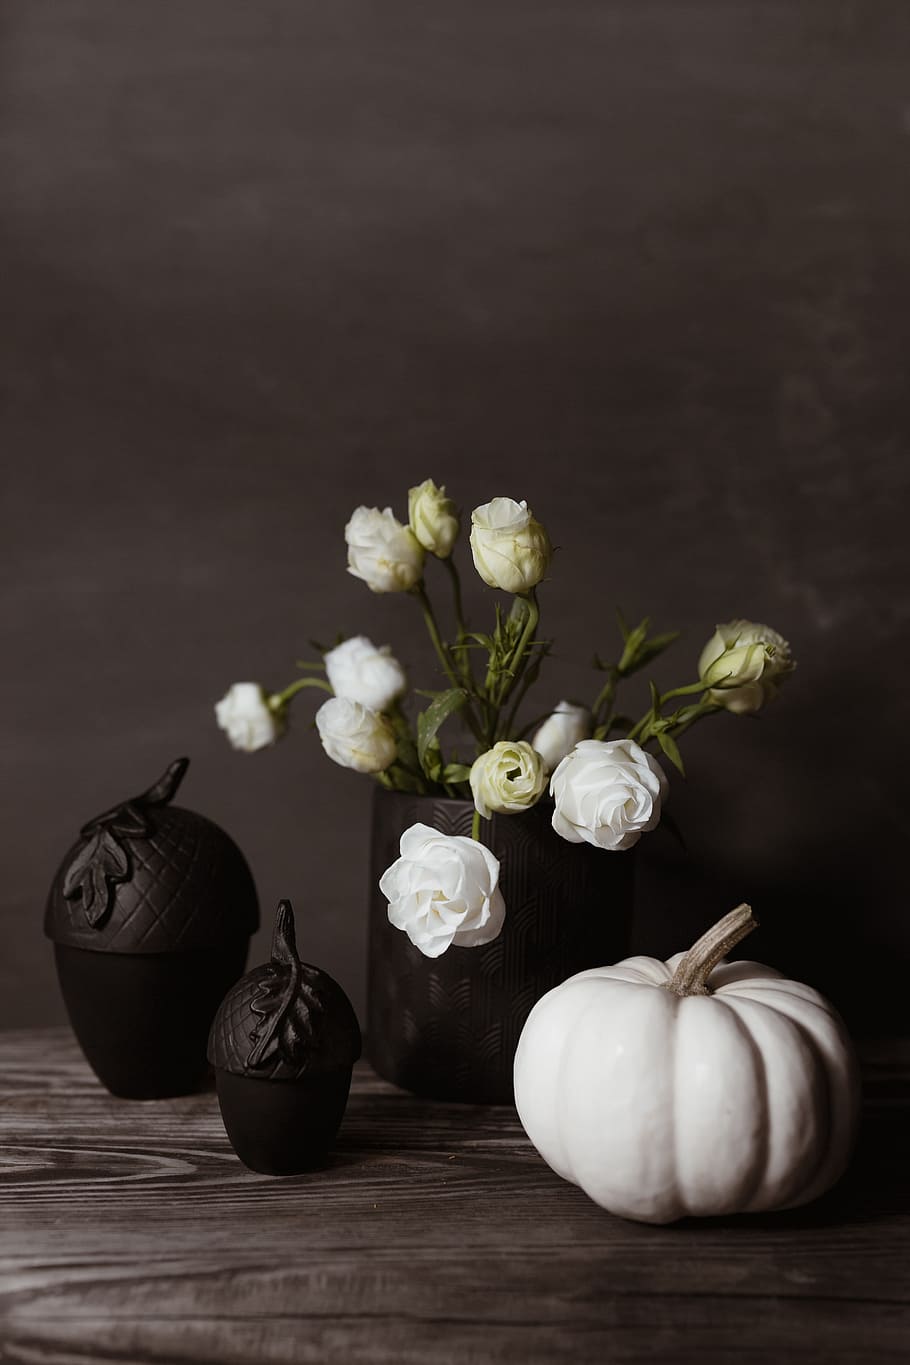 dark, mood home decorations, flowers, decorations, home decor, pumpkin, halloween, white pumpkin, freshness, table